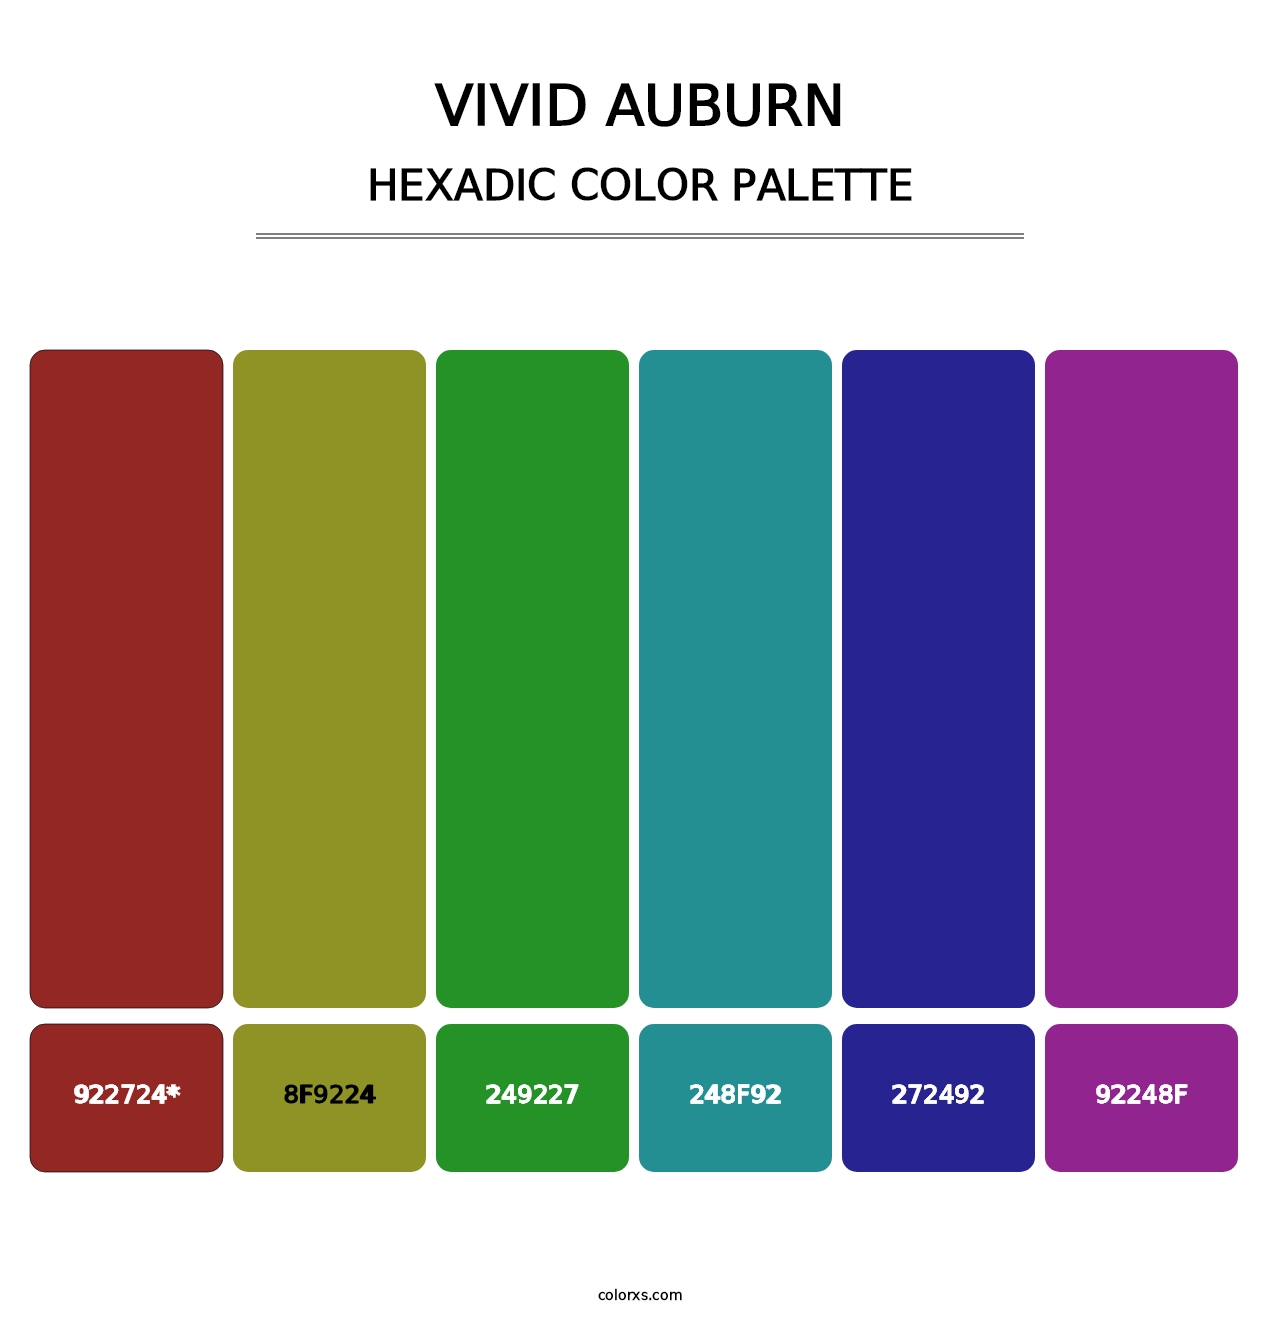 Vivid Auburn - Hexadic Color Palette